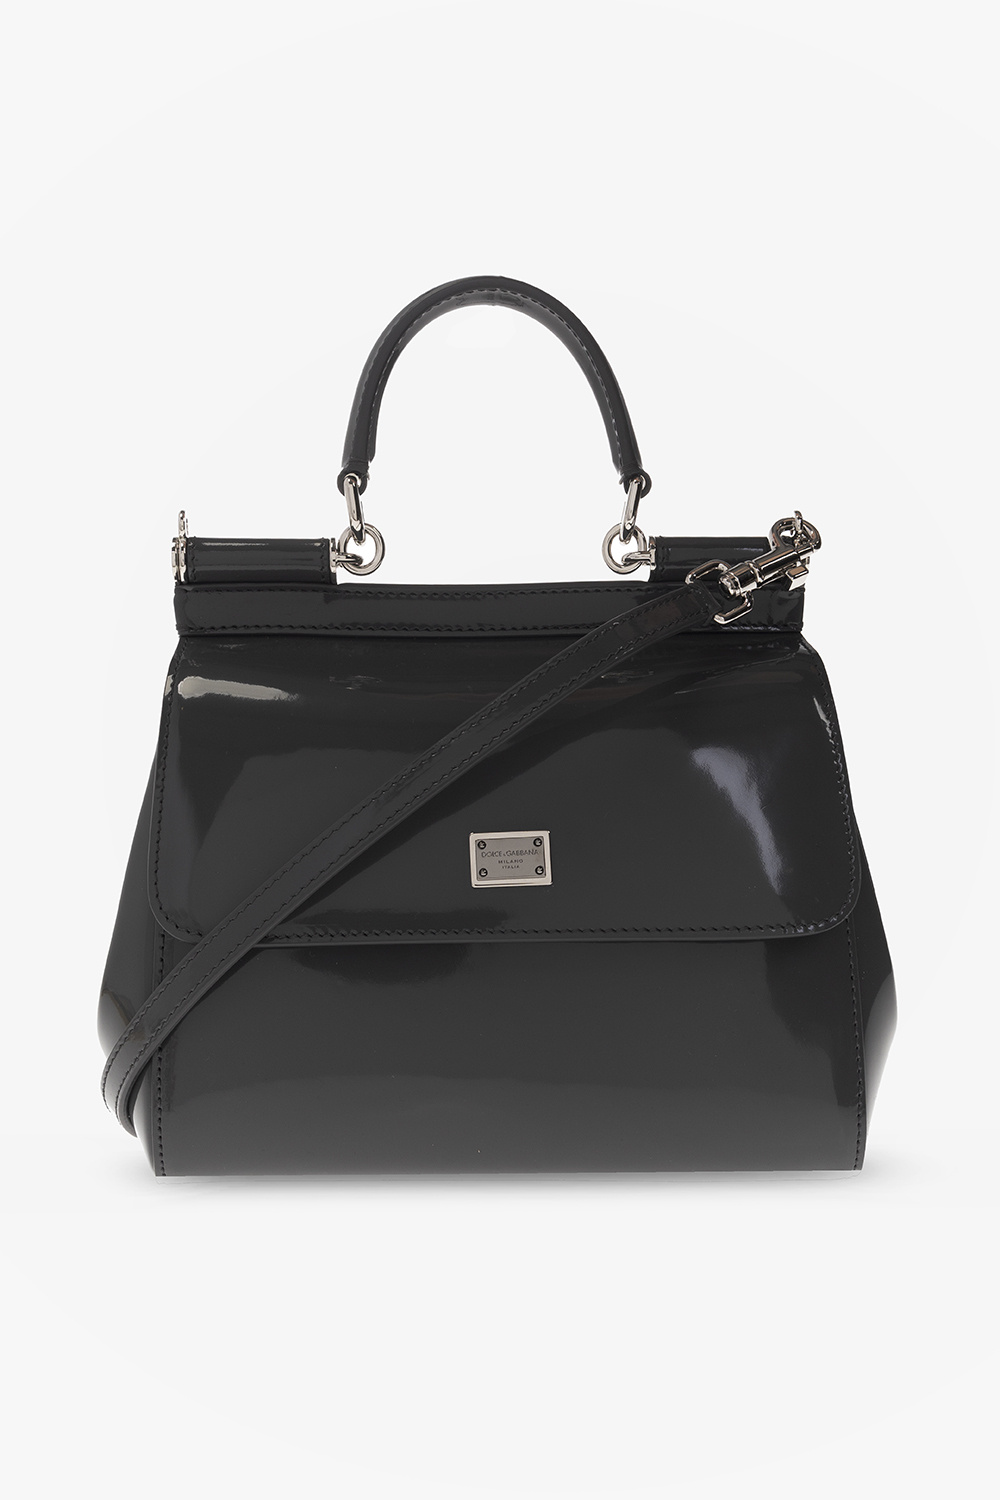 Dolce & Gabbana Small sicily bag for Women - GB